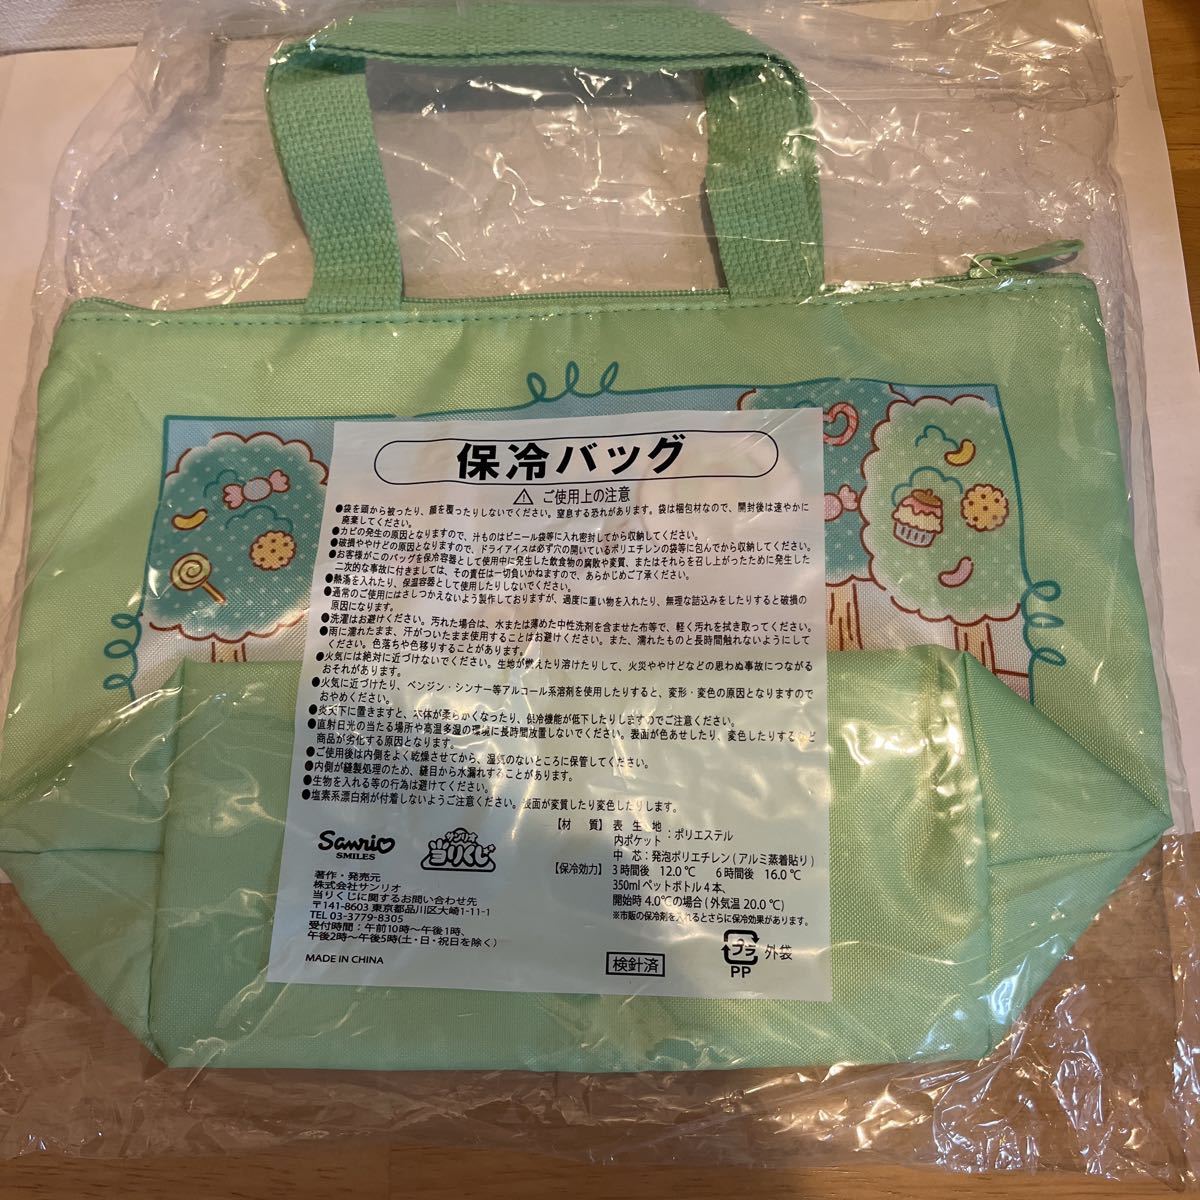  Sanrio Pom Pom Purin keep cool bag green per lot unopened goods 